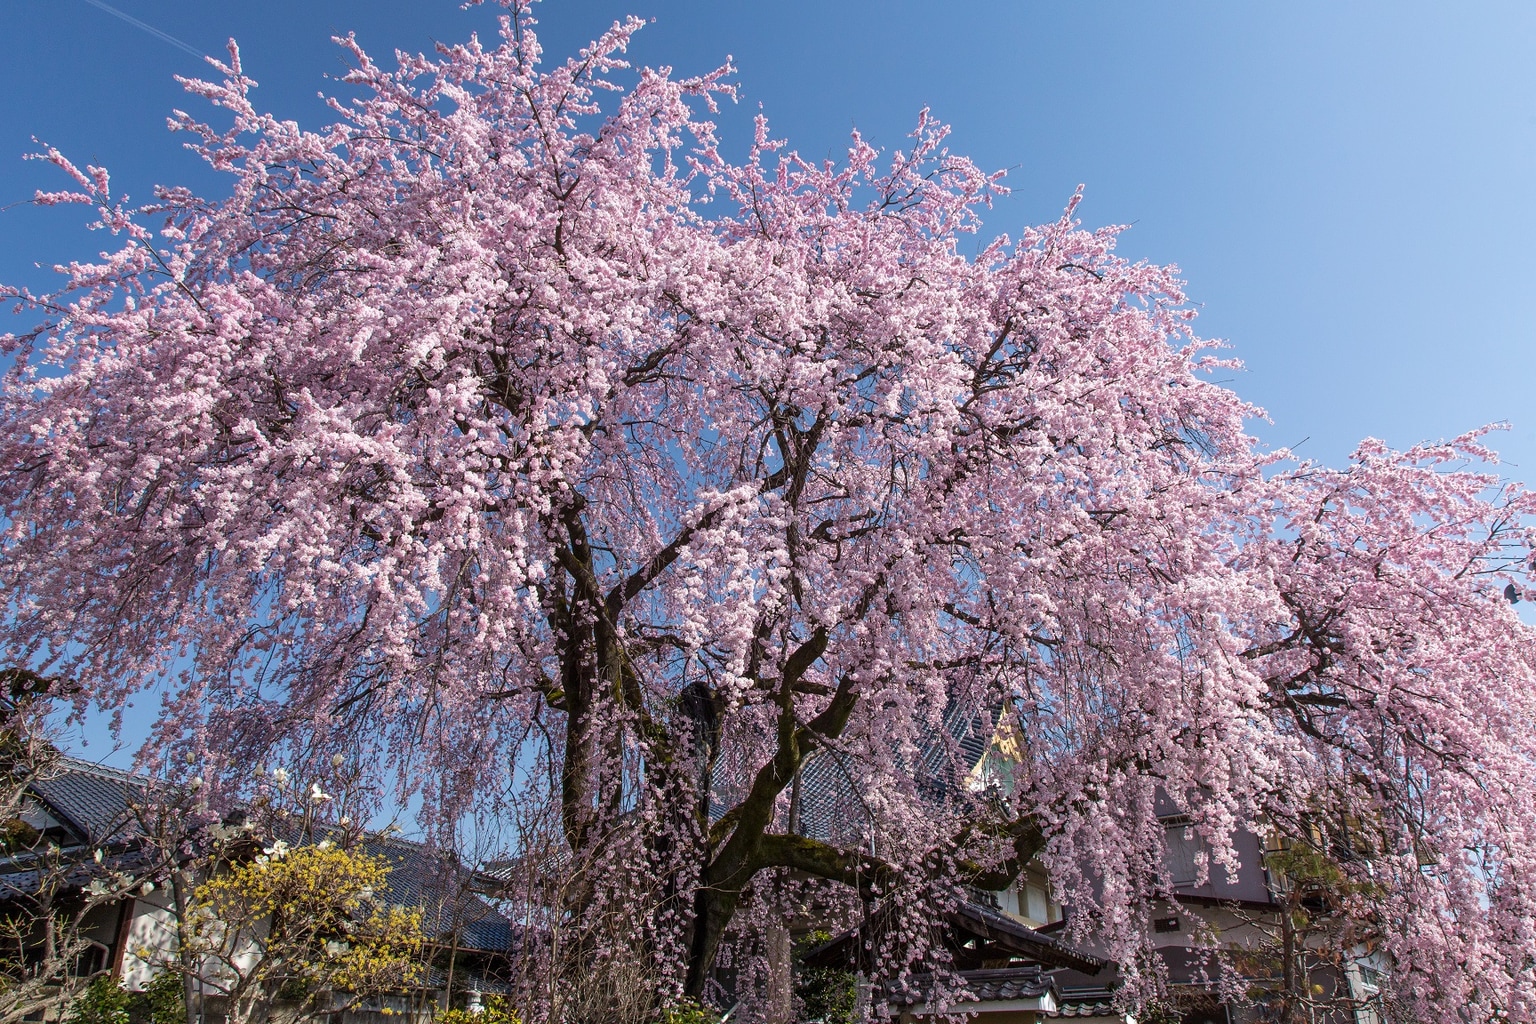 Travel Japan: See Cherry Trees with Samurai Origins at Nagano's Ina